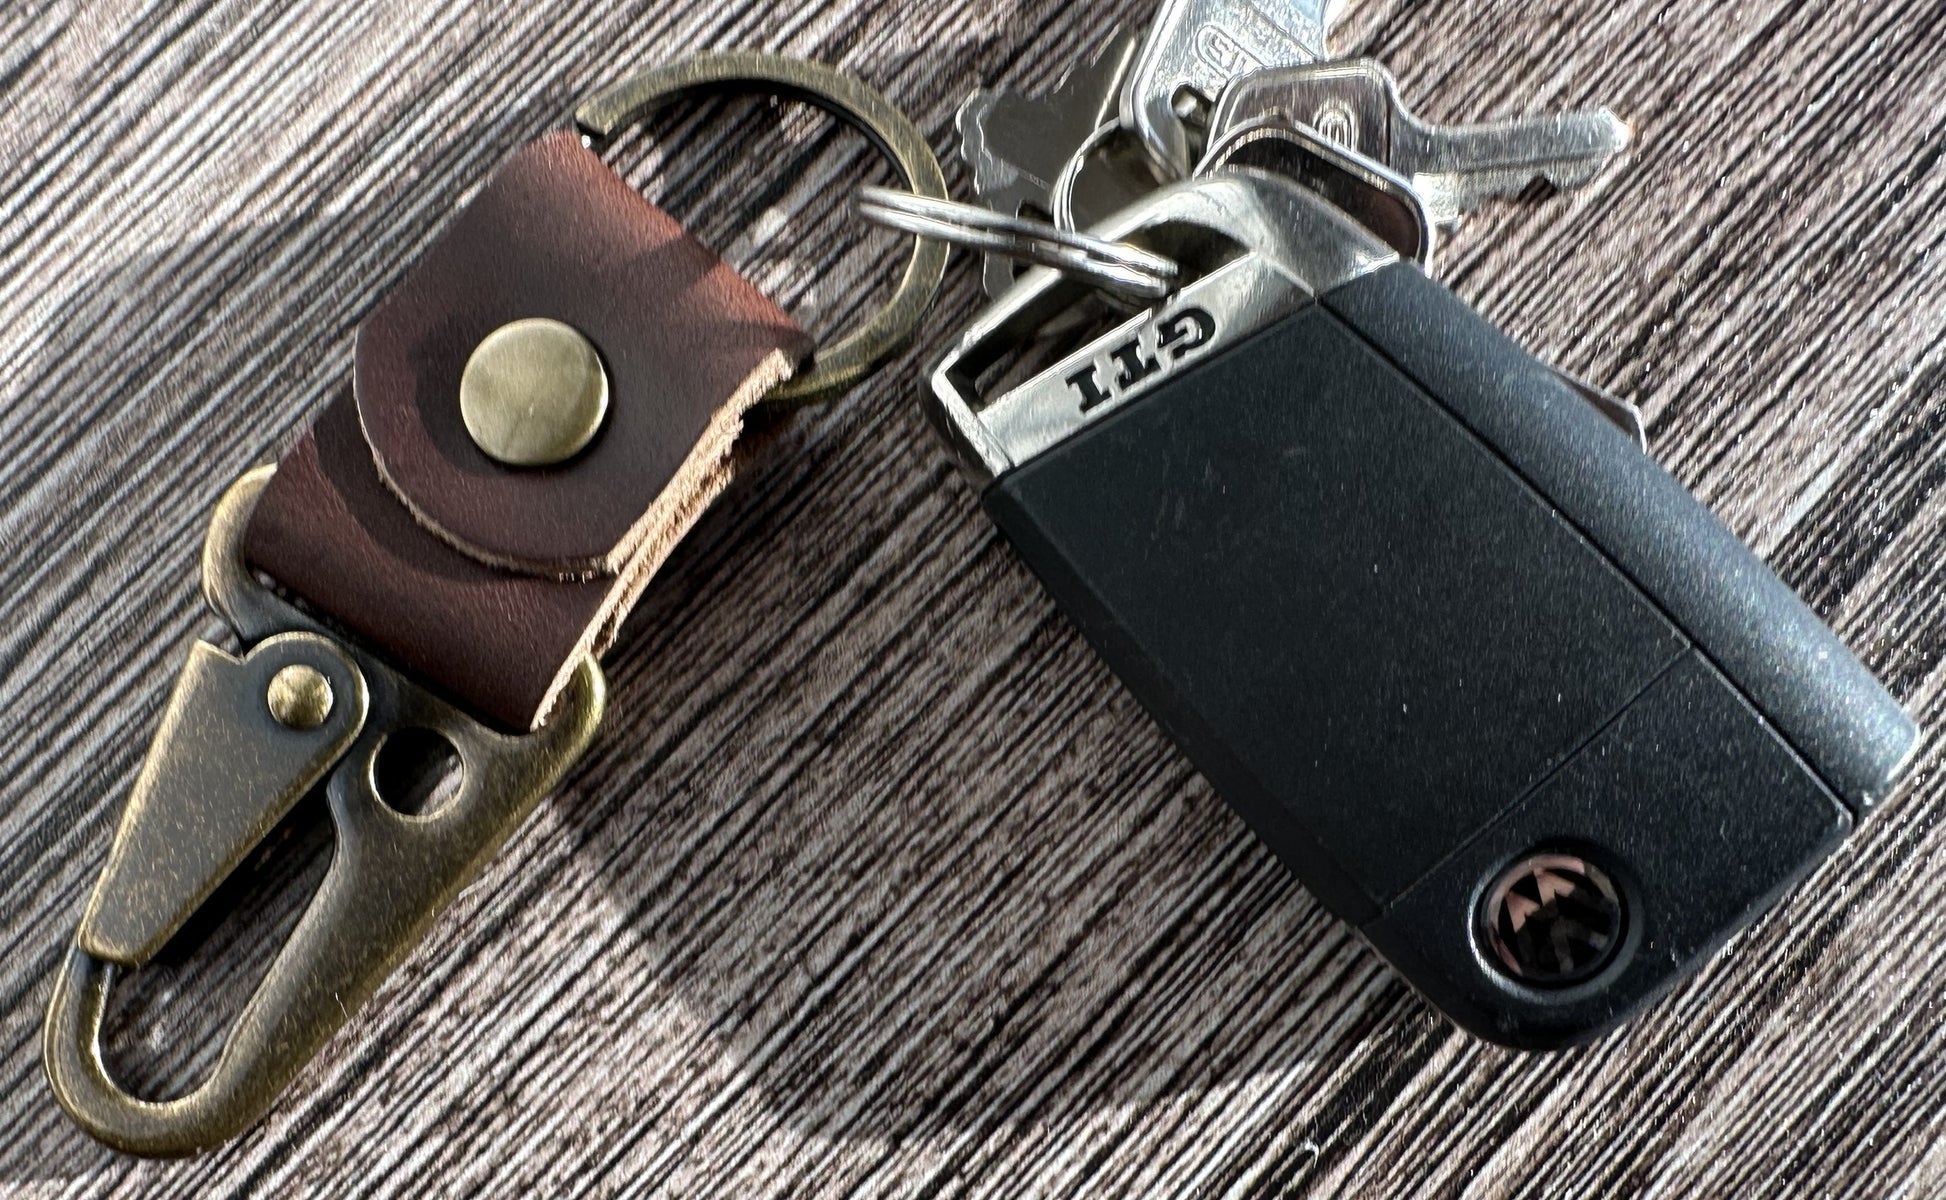 Men's Women's Gun Metal Black & Leather Clip Keychain Car Key Ring